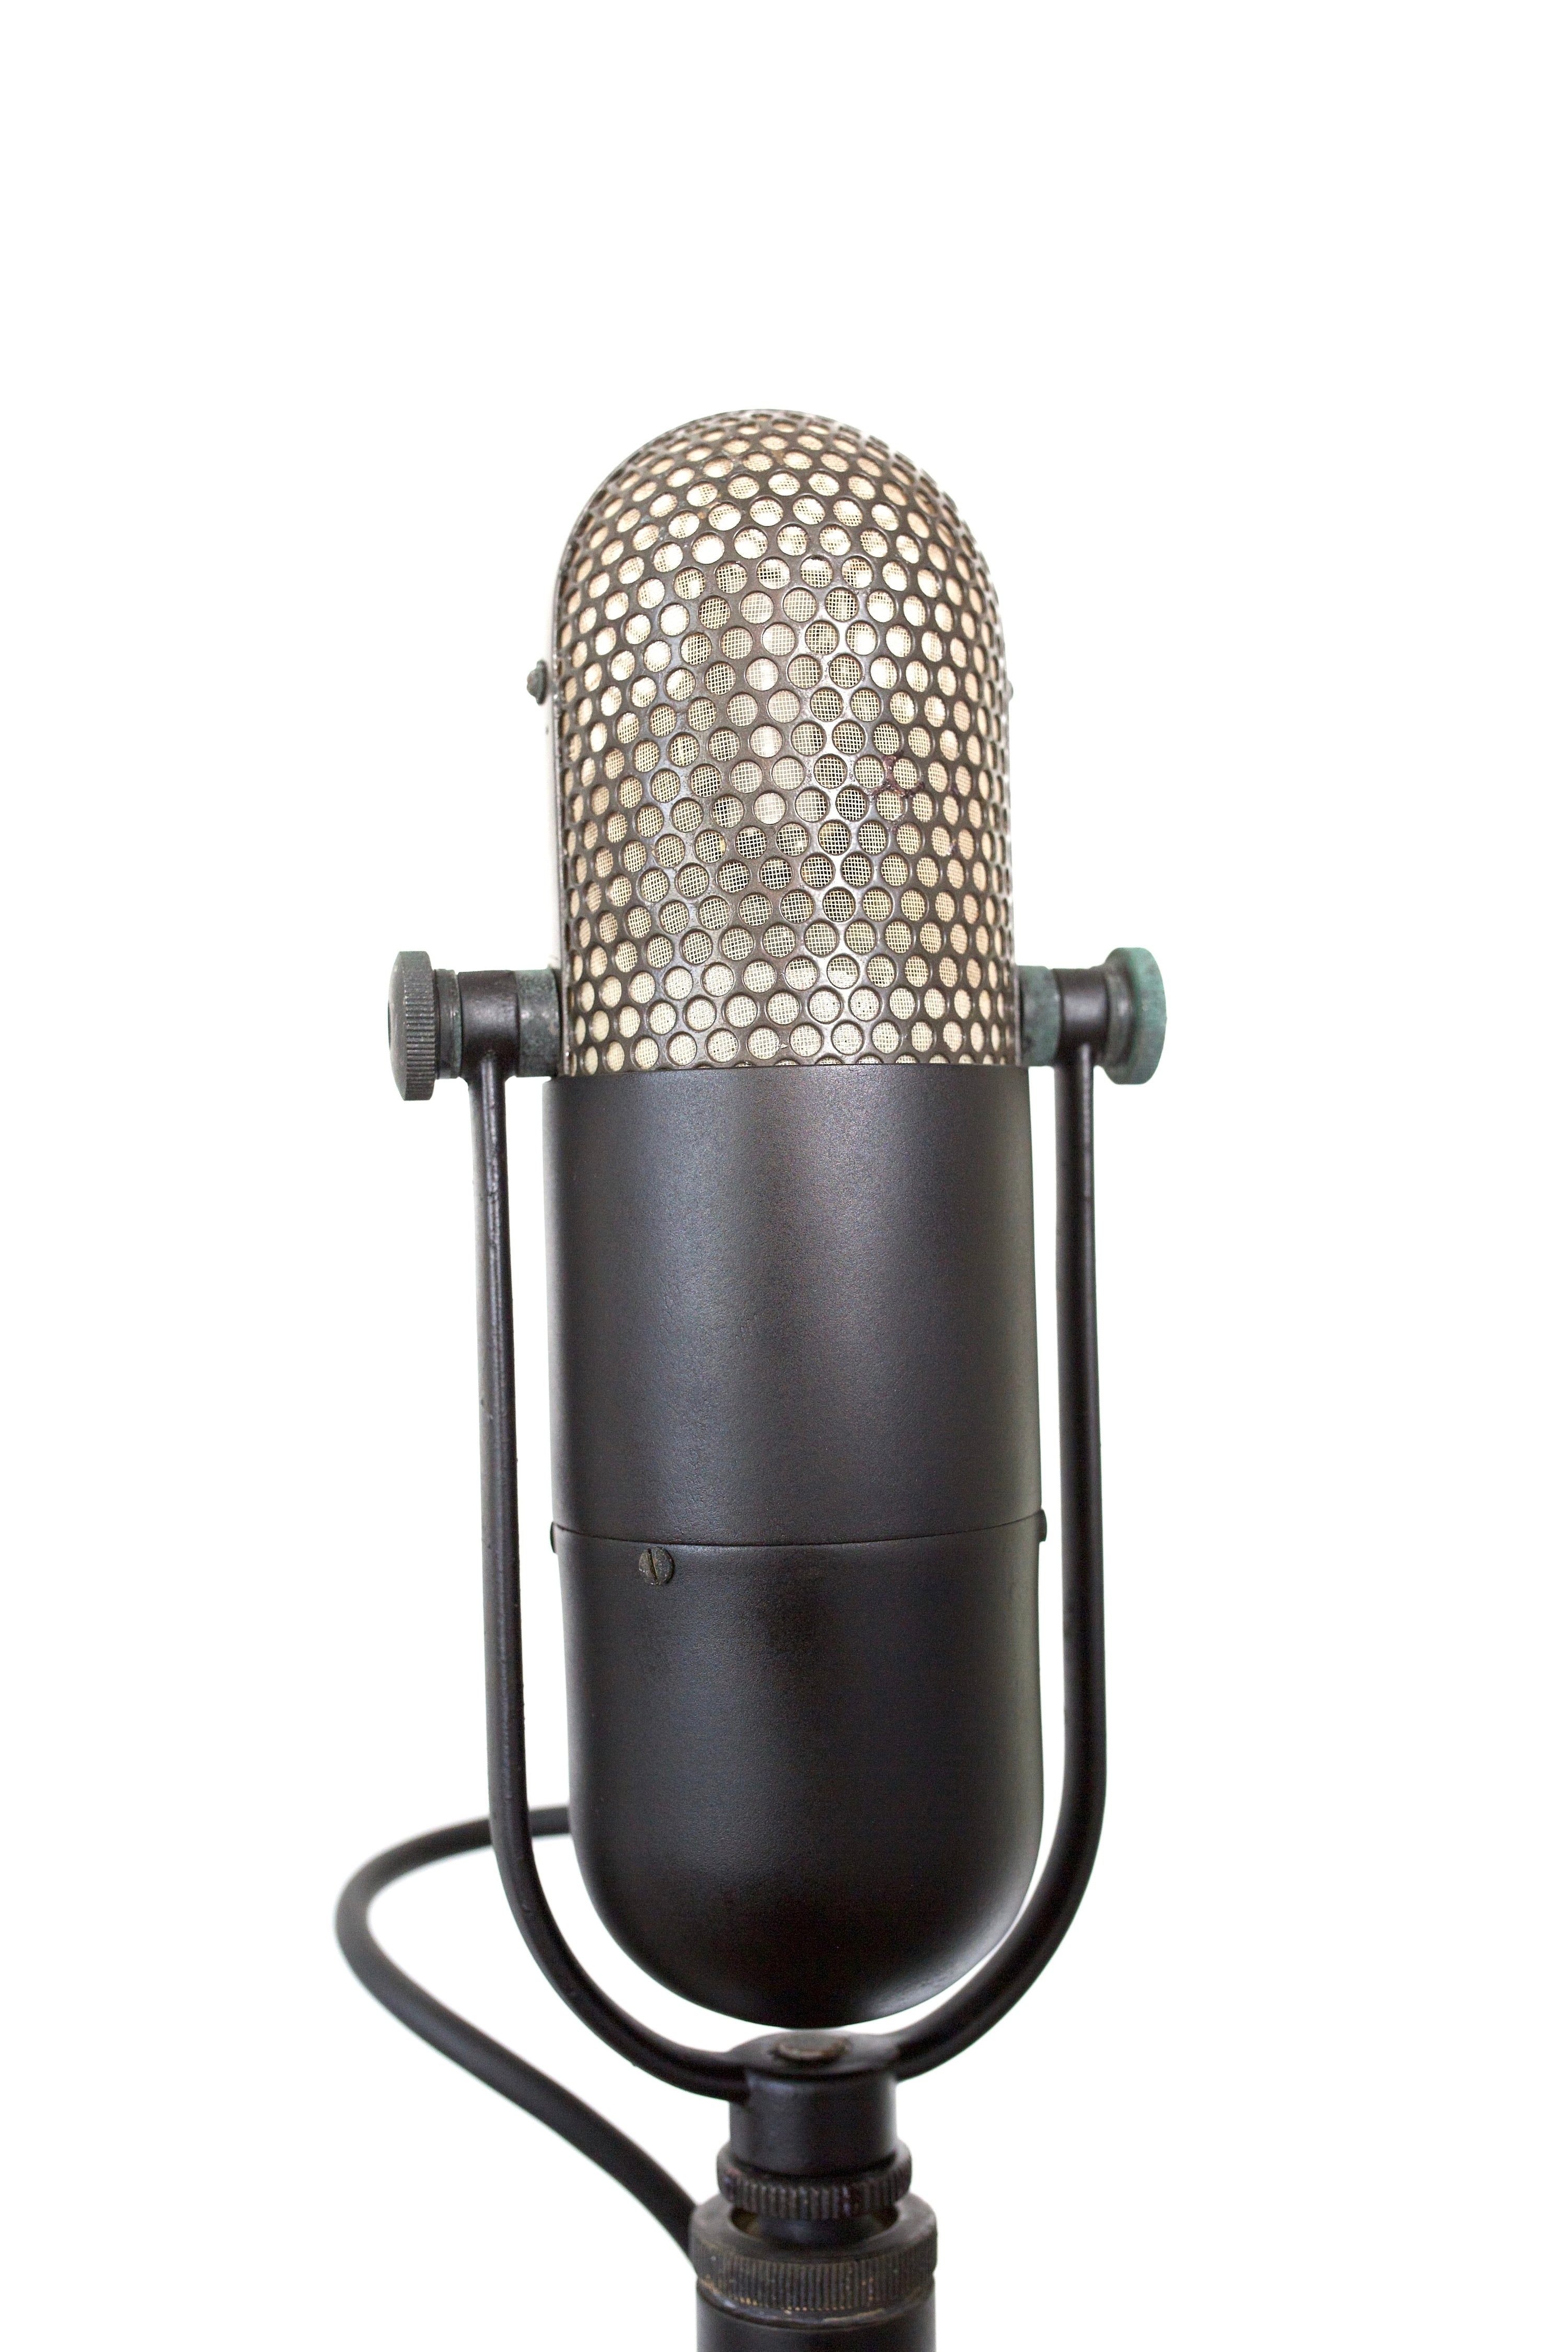 RCA 77-DXM Ribbon Microphone